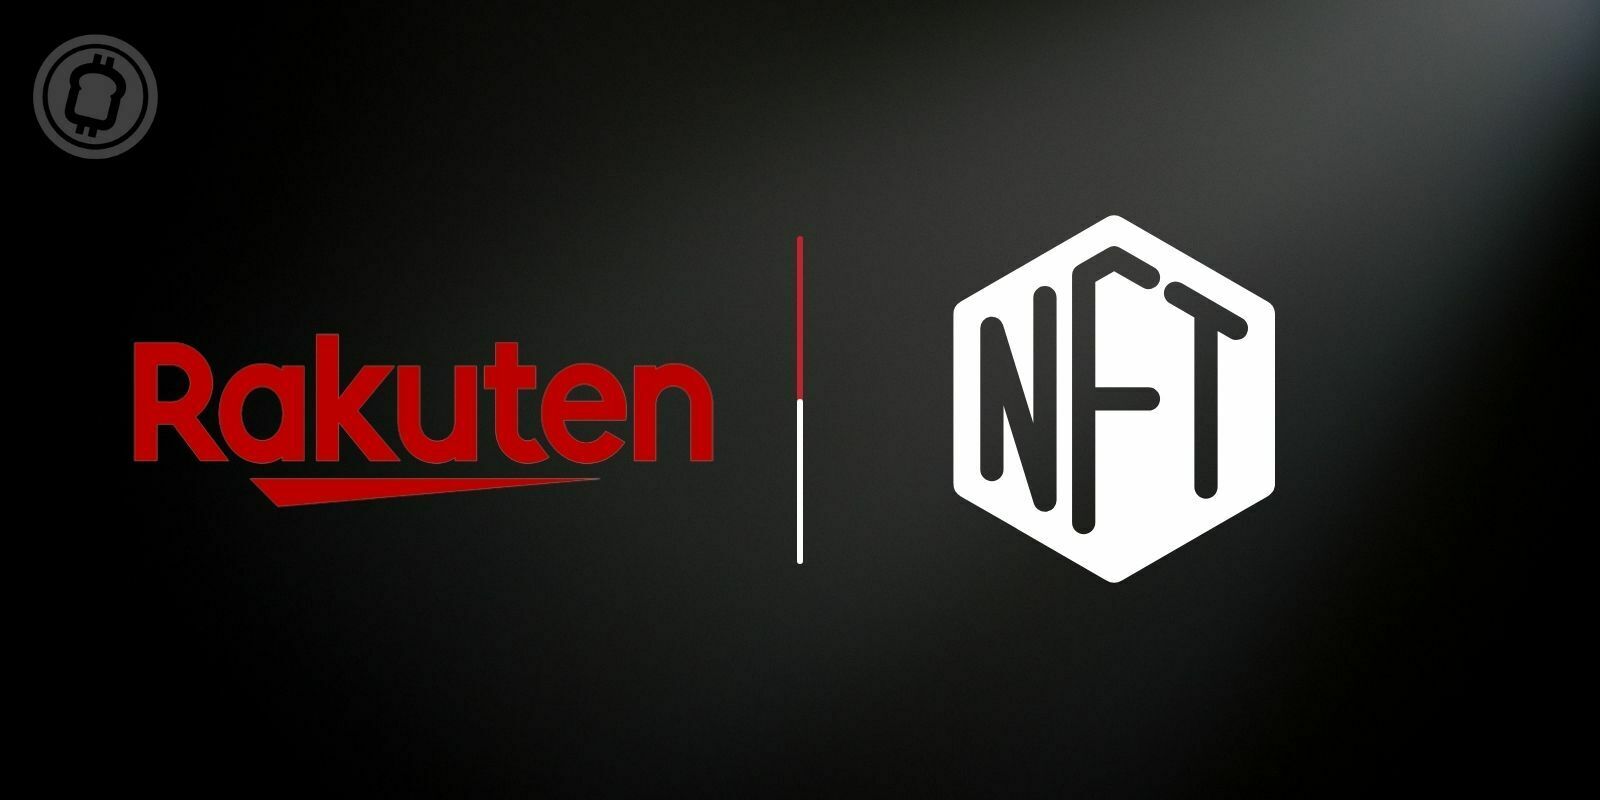 Le géant du e-commerce Rakuten lance sa propre marketplace NFT